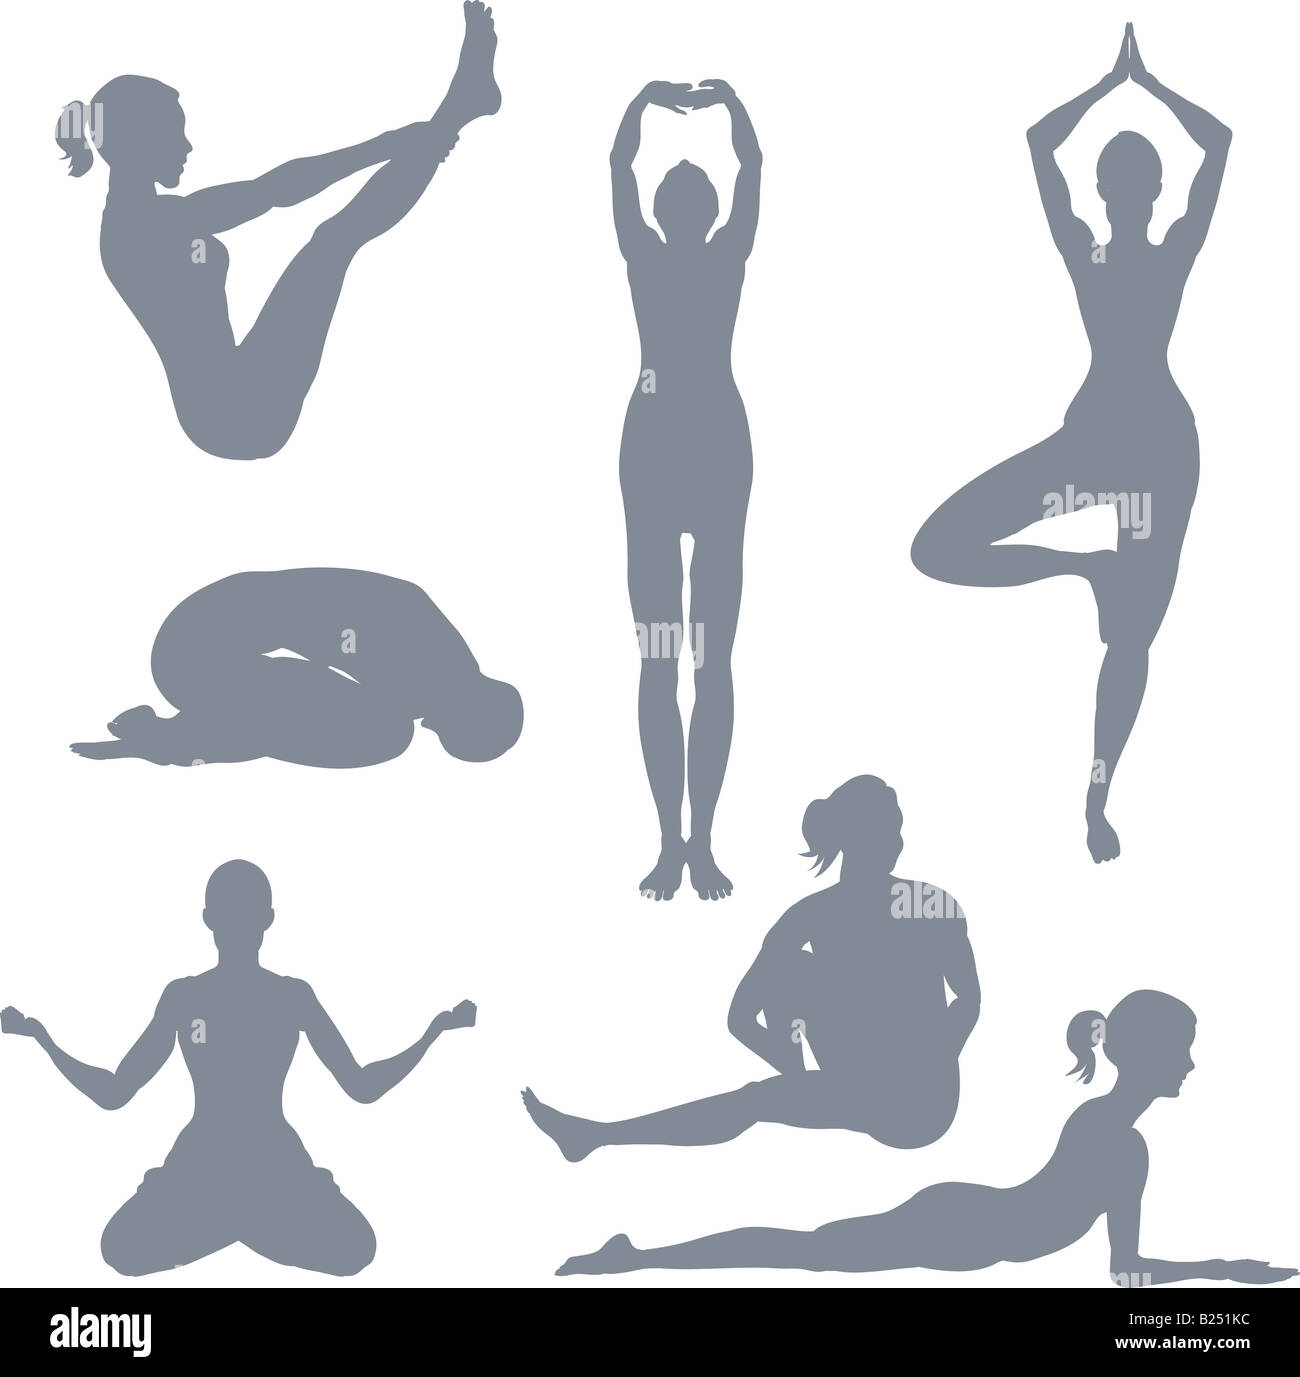 Yoga postures. A set of yoga postures silhouettes. Stock Photo